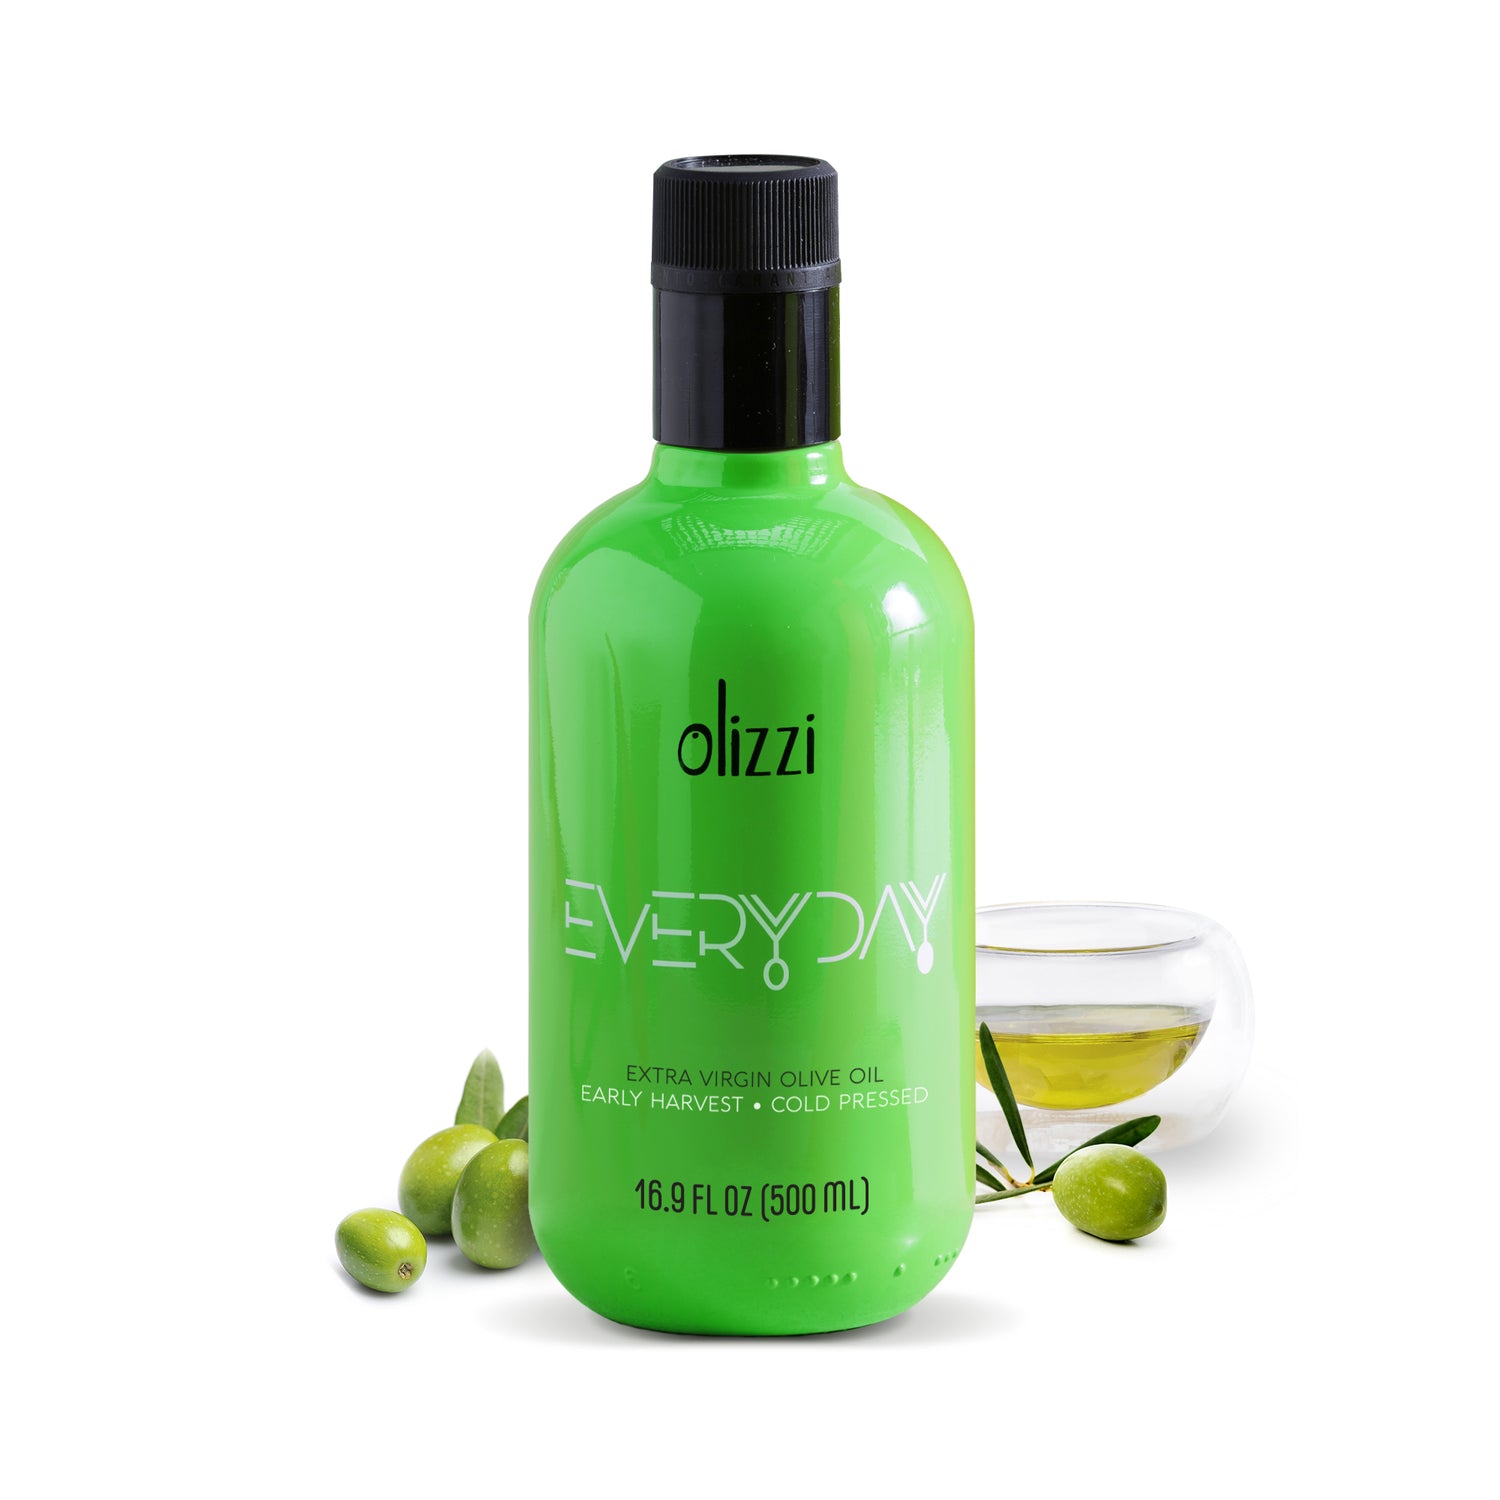 Olizzi Everyday Extra Virgin Olive Oil, Award Winner, Early Harvest, Cold Pressed 16.9 FL OZ